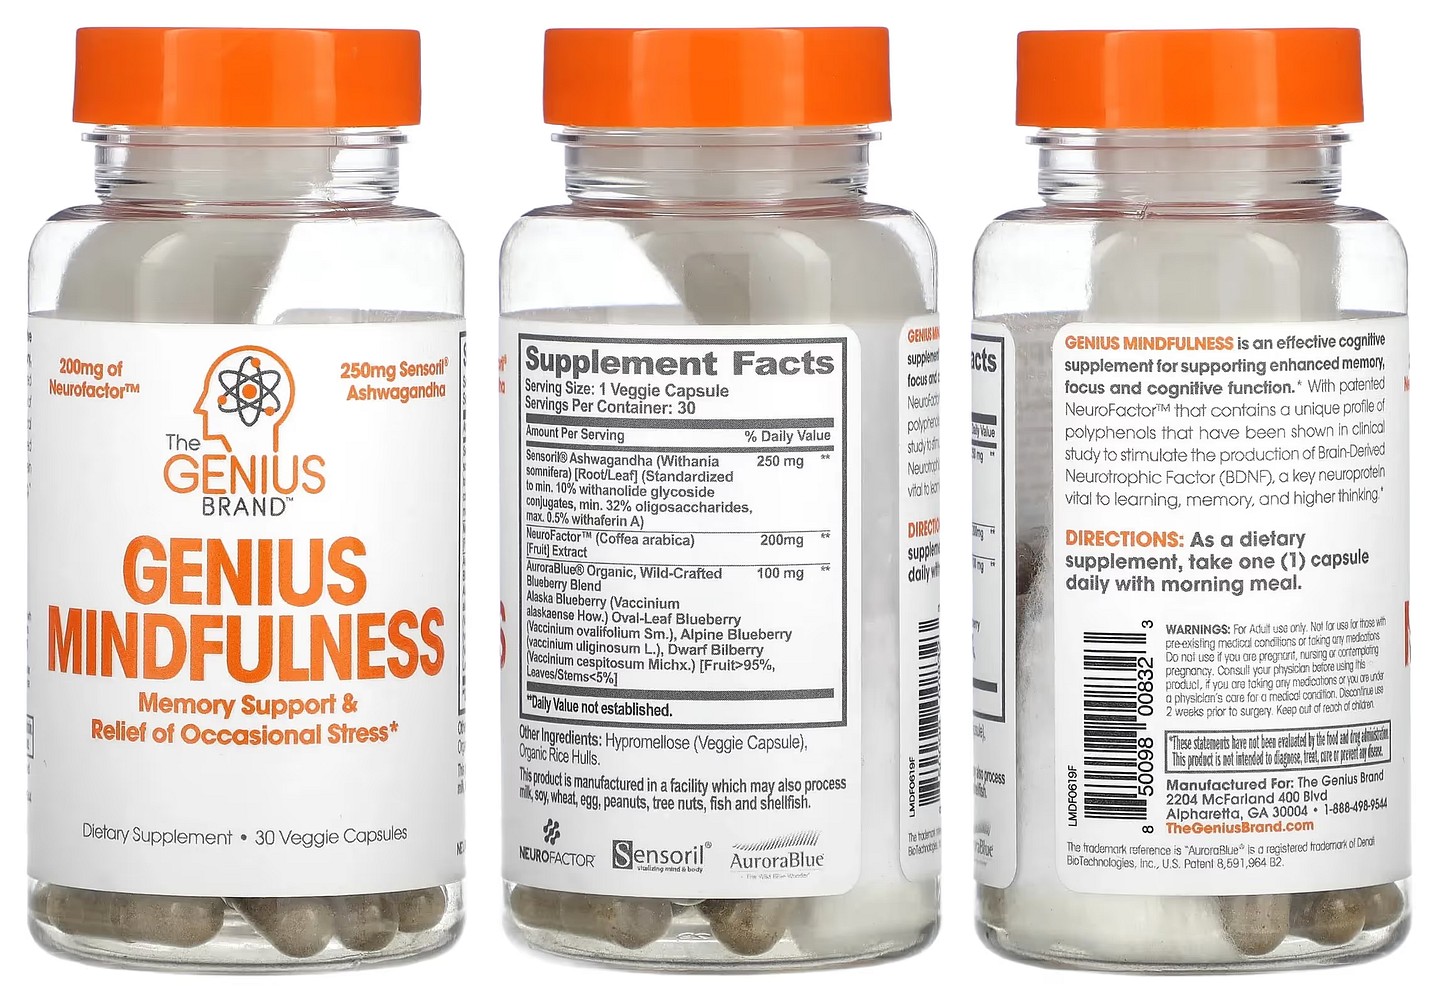 The Genius Brand, Genius Mindfullness packaging